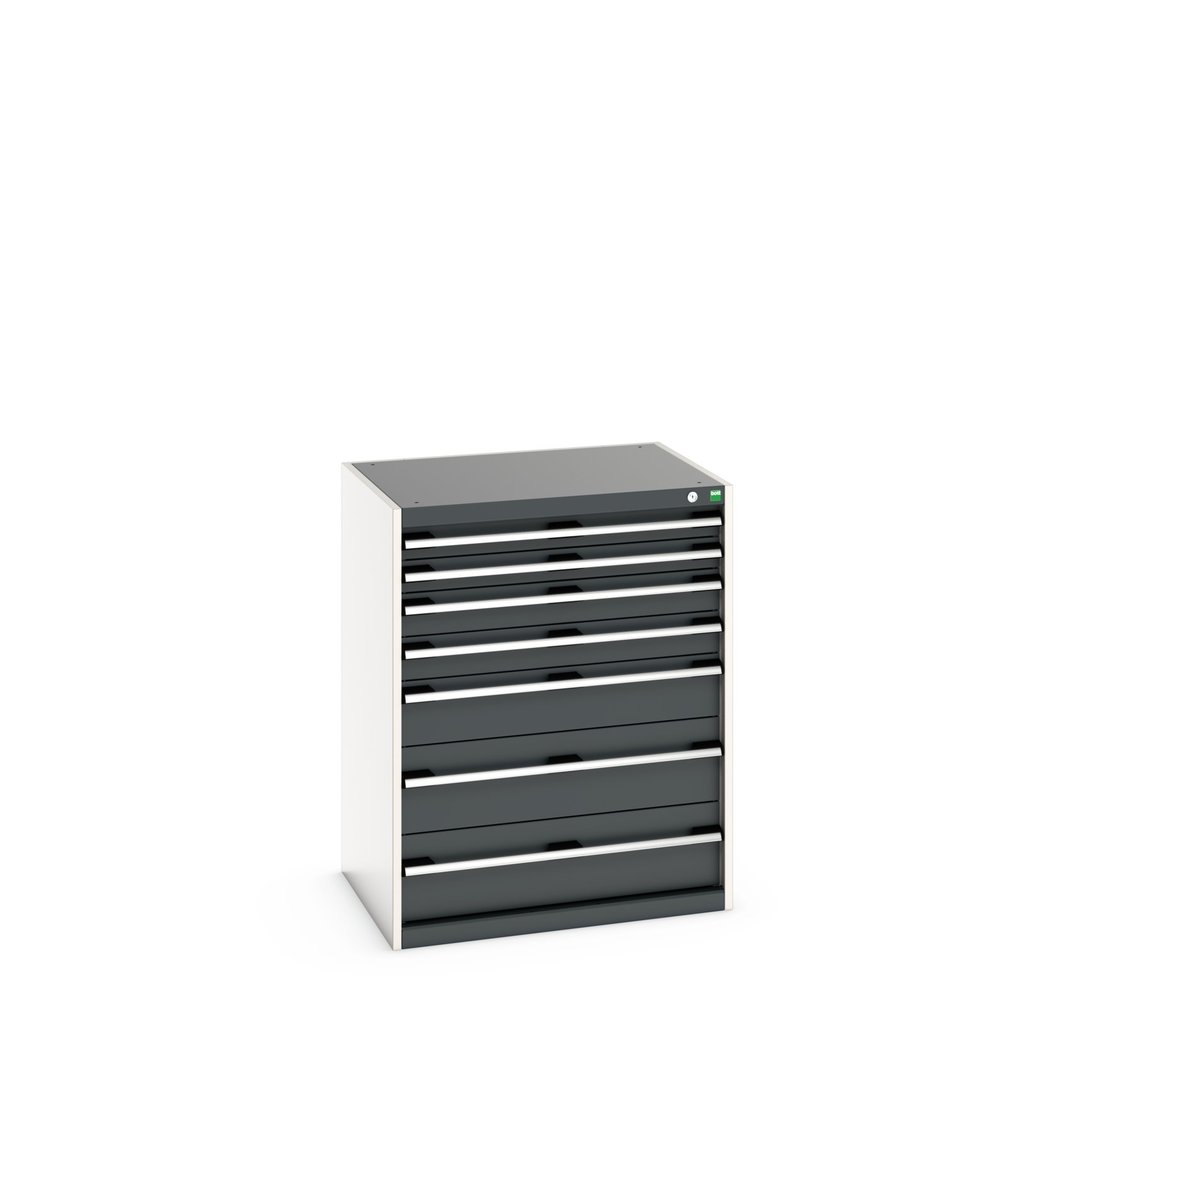 40020054. - cubio drawer cabinet